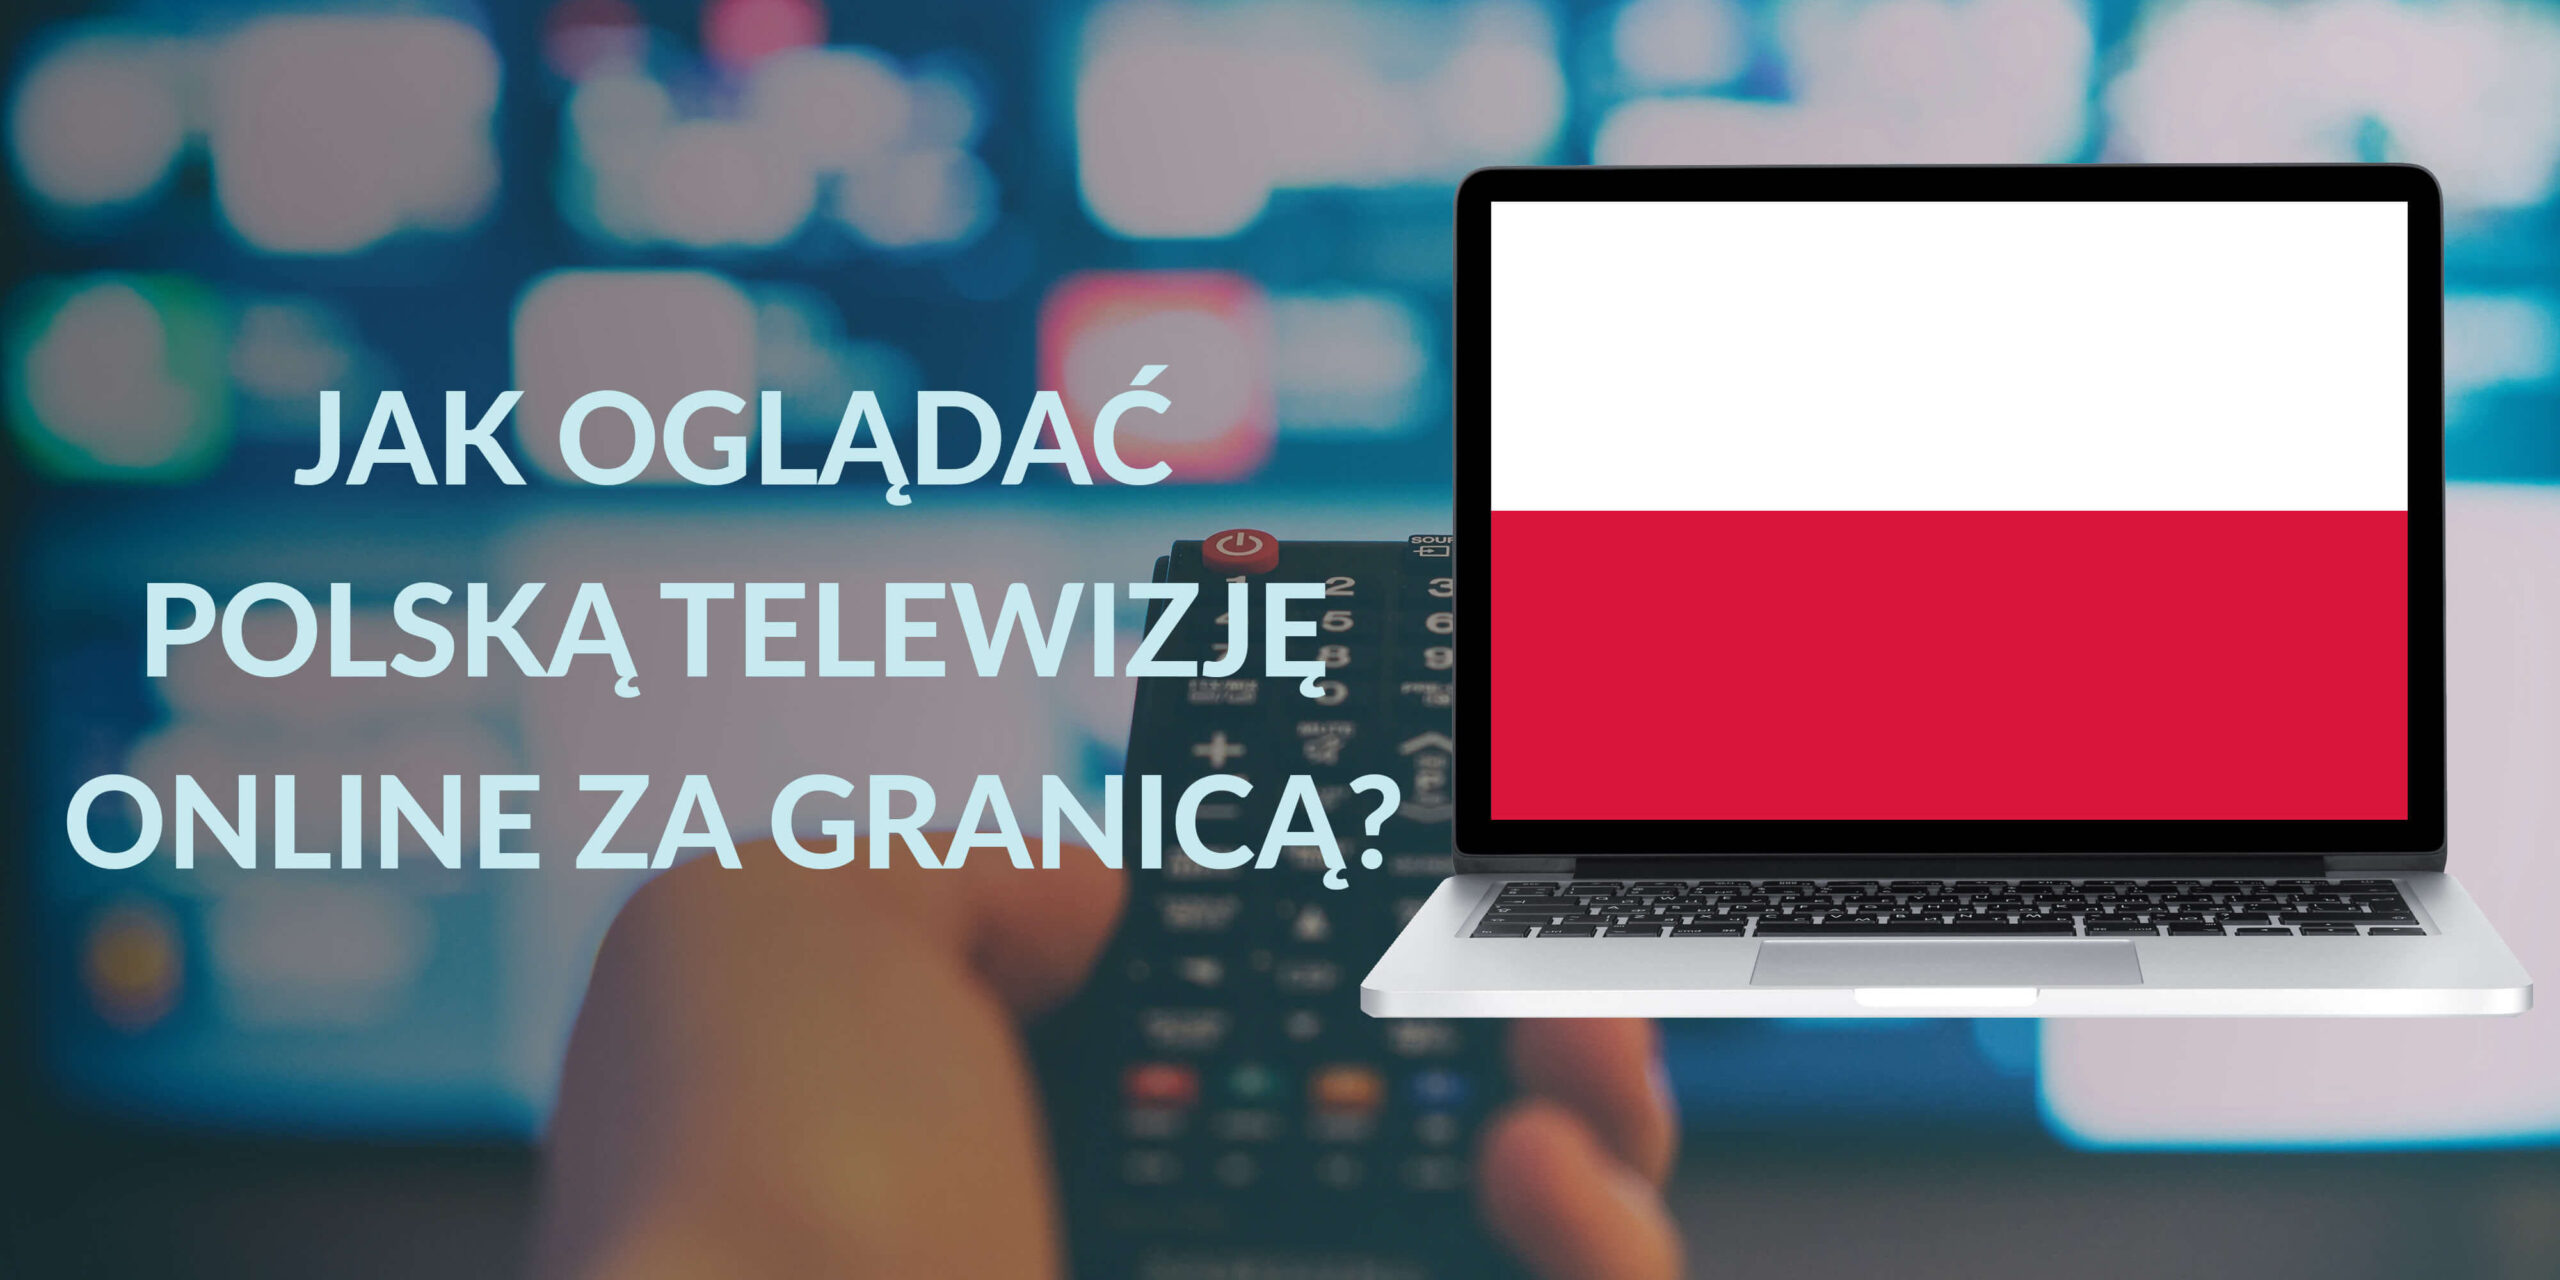 Polska telewizja online za granicą jak oglądać w 2020